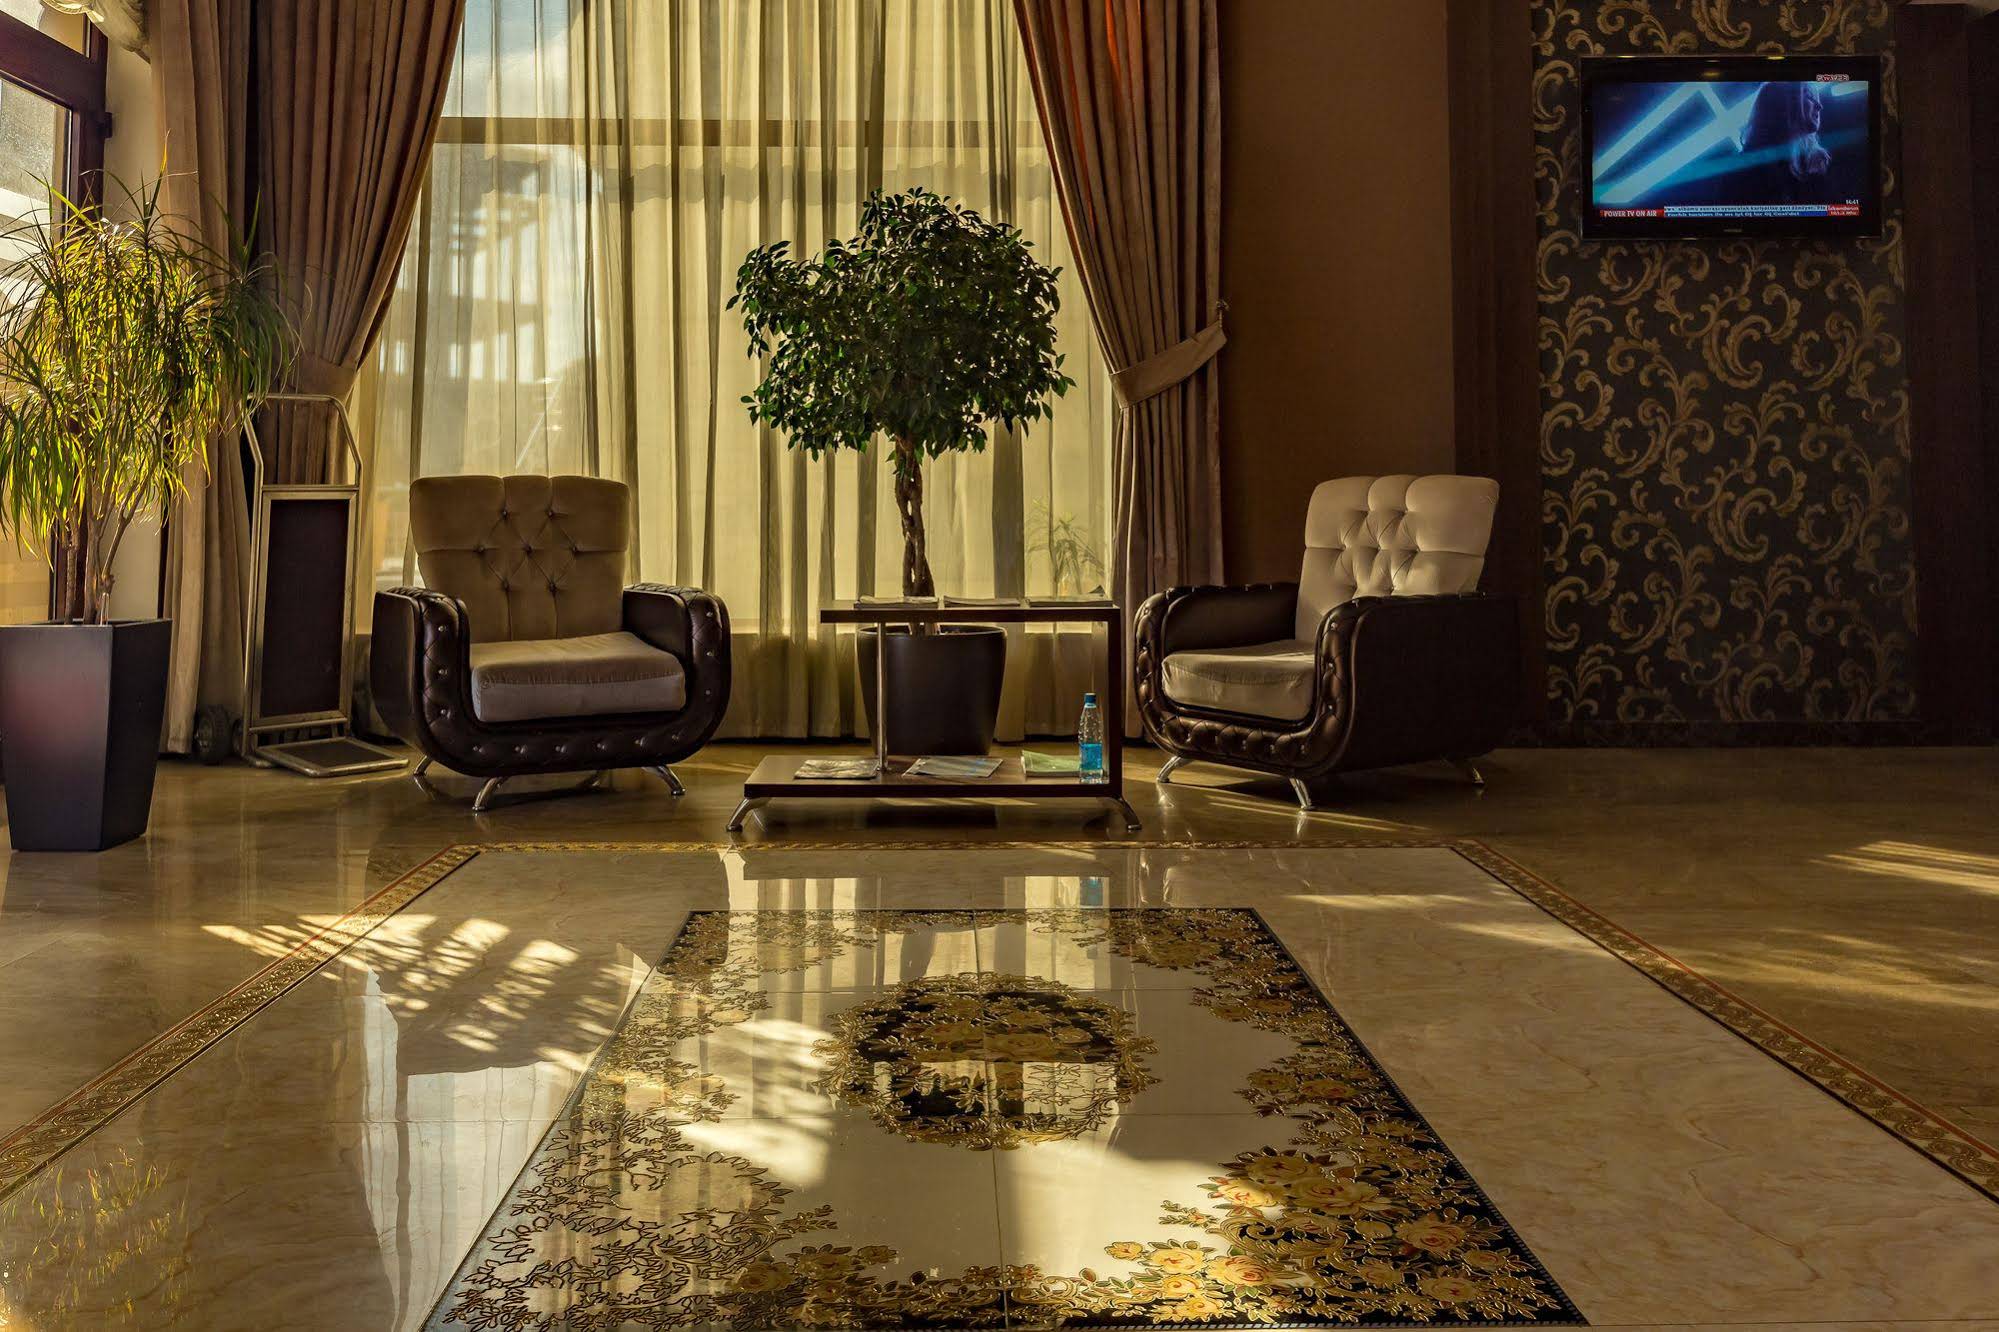 Ariva Hotel Baku